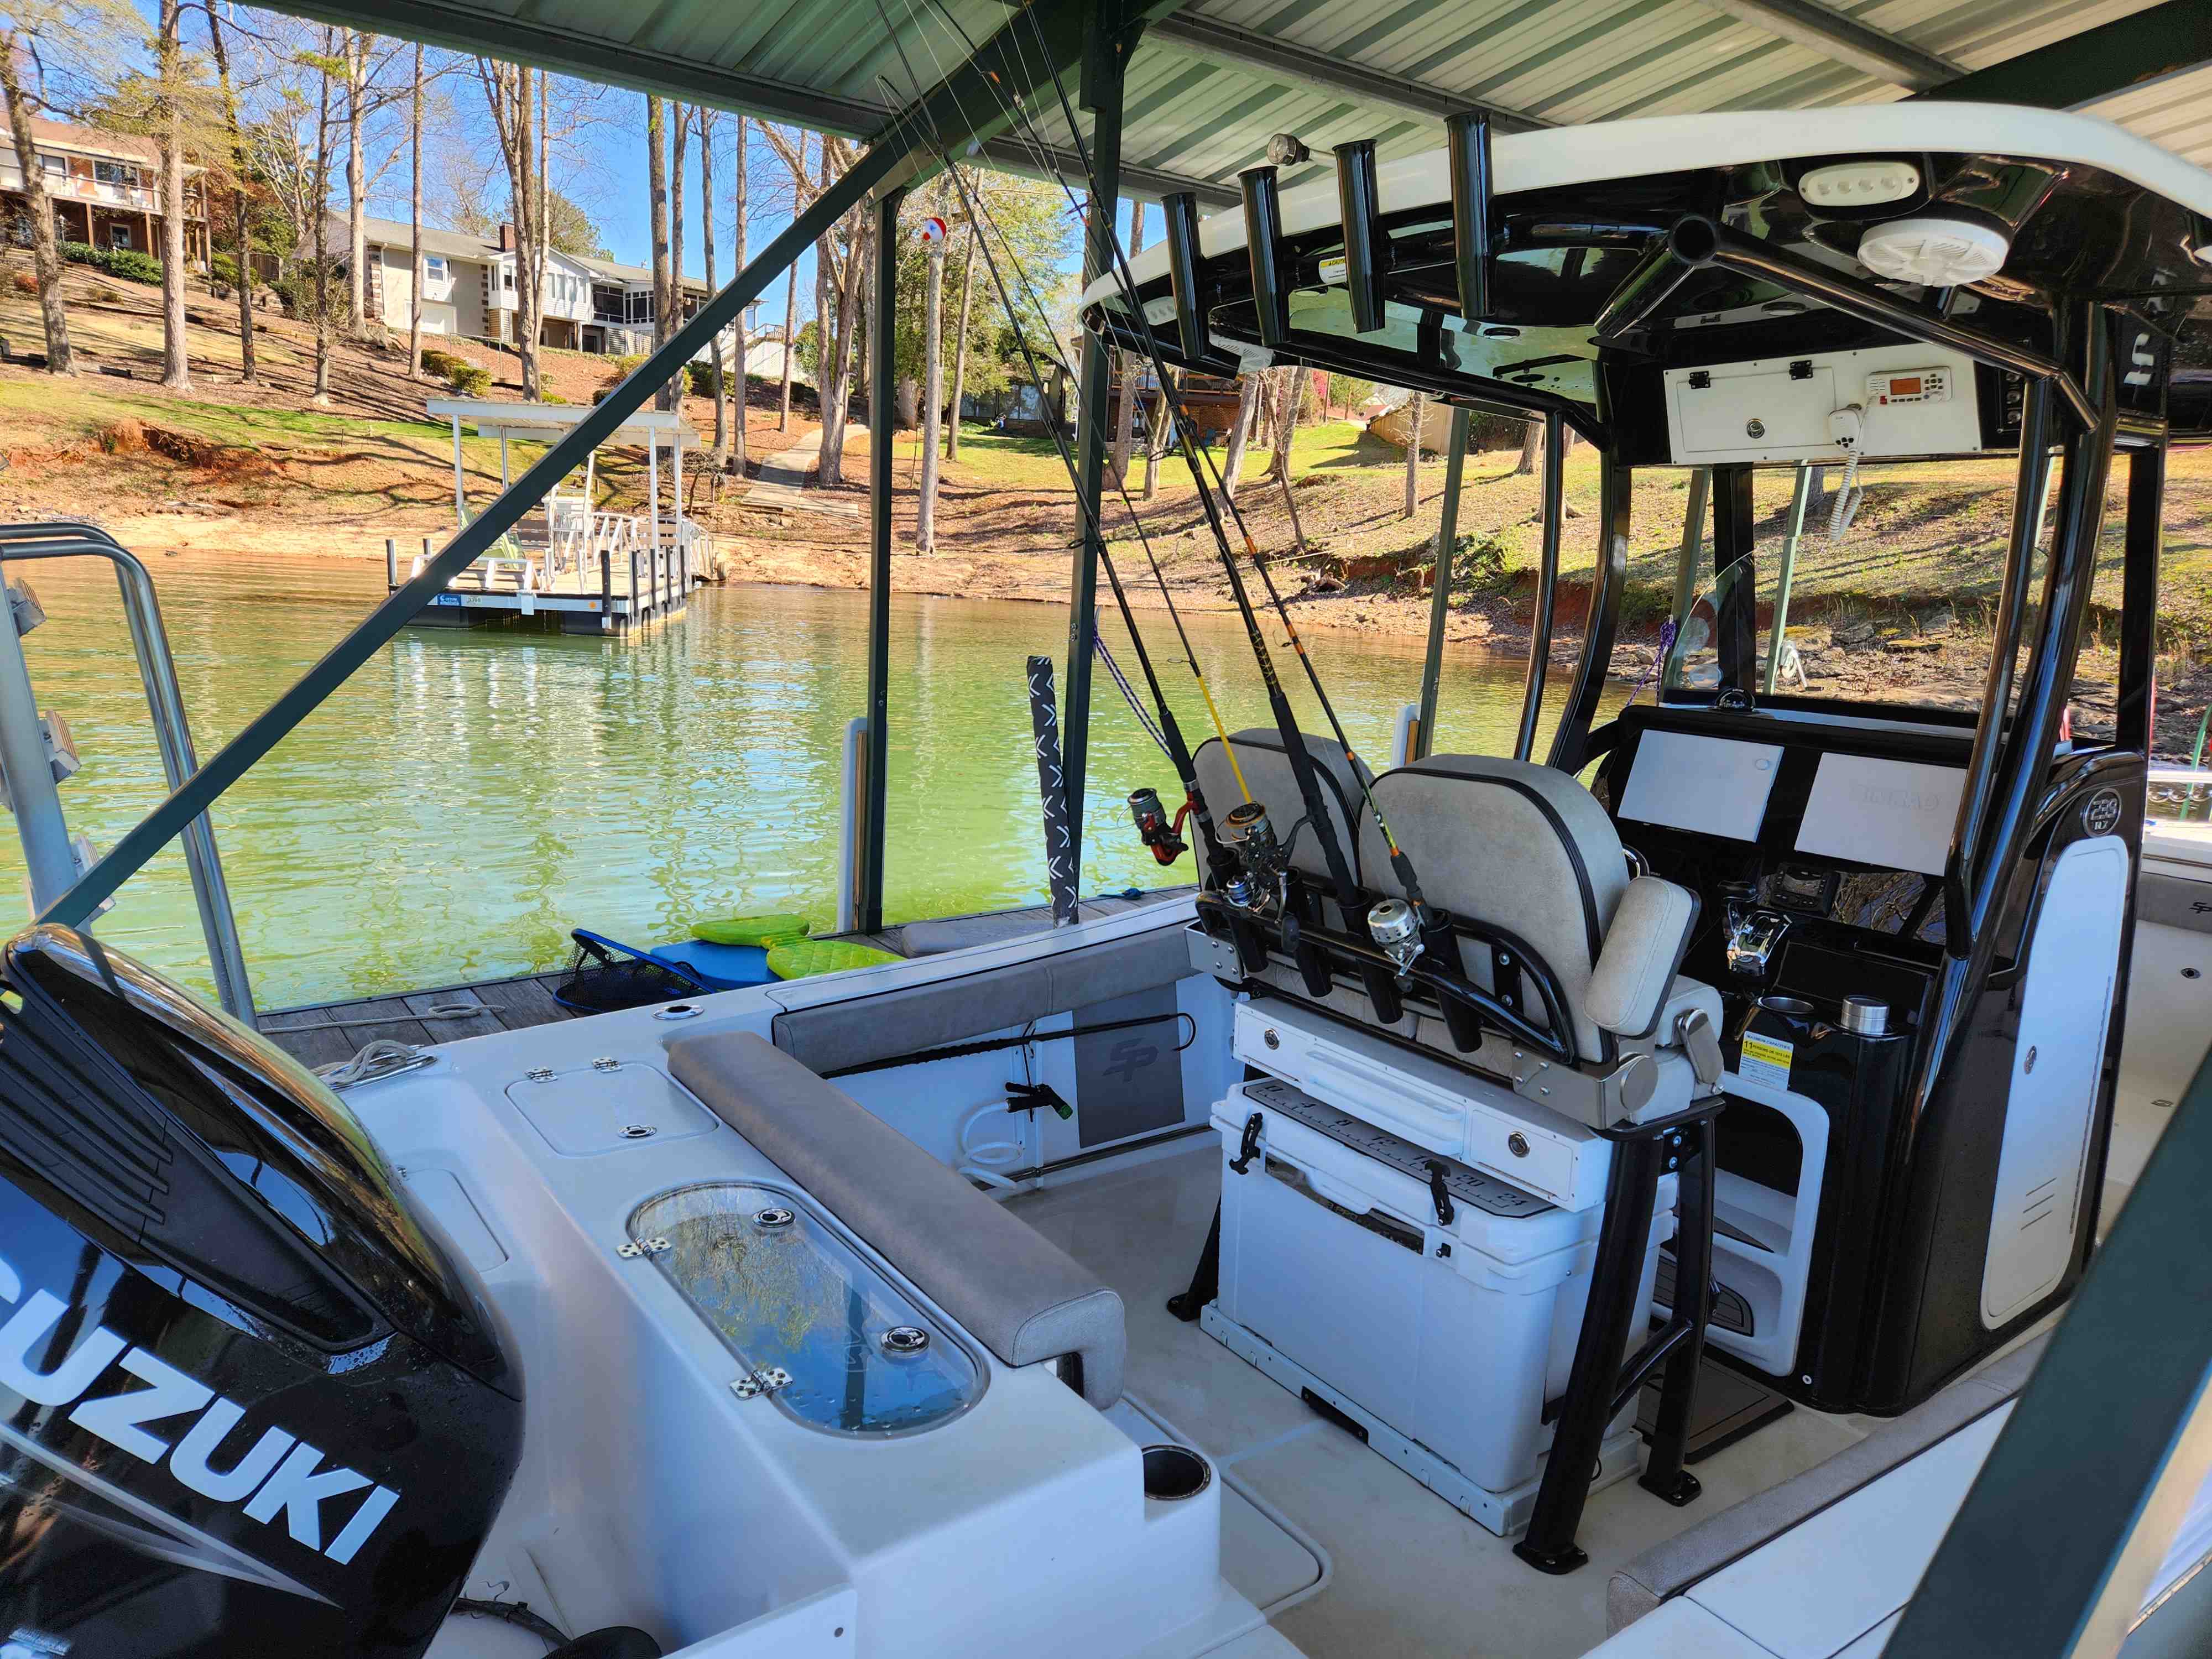  boat rentals South Carolina ANDERSON South Carolina  Sea Pro 239 DLX 2022 24 